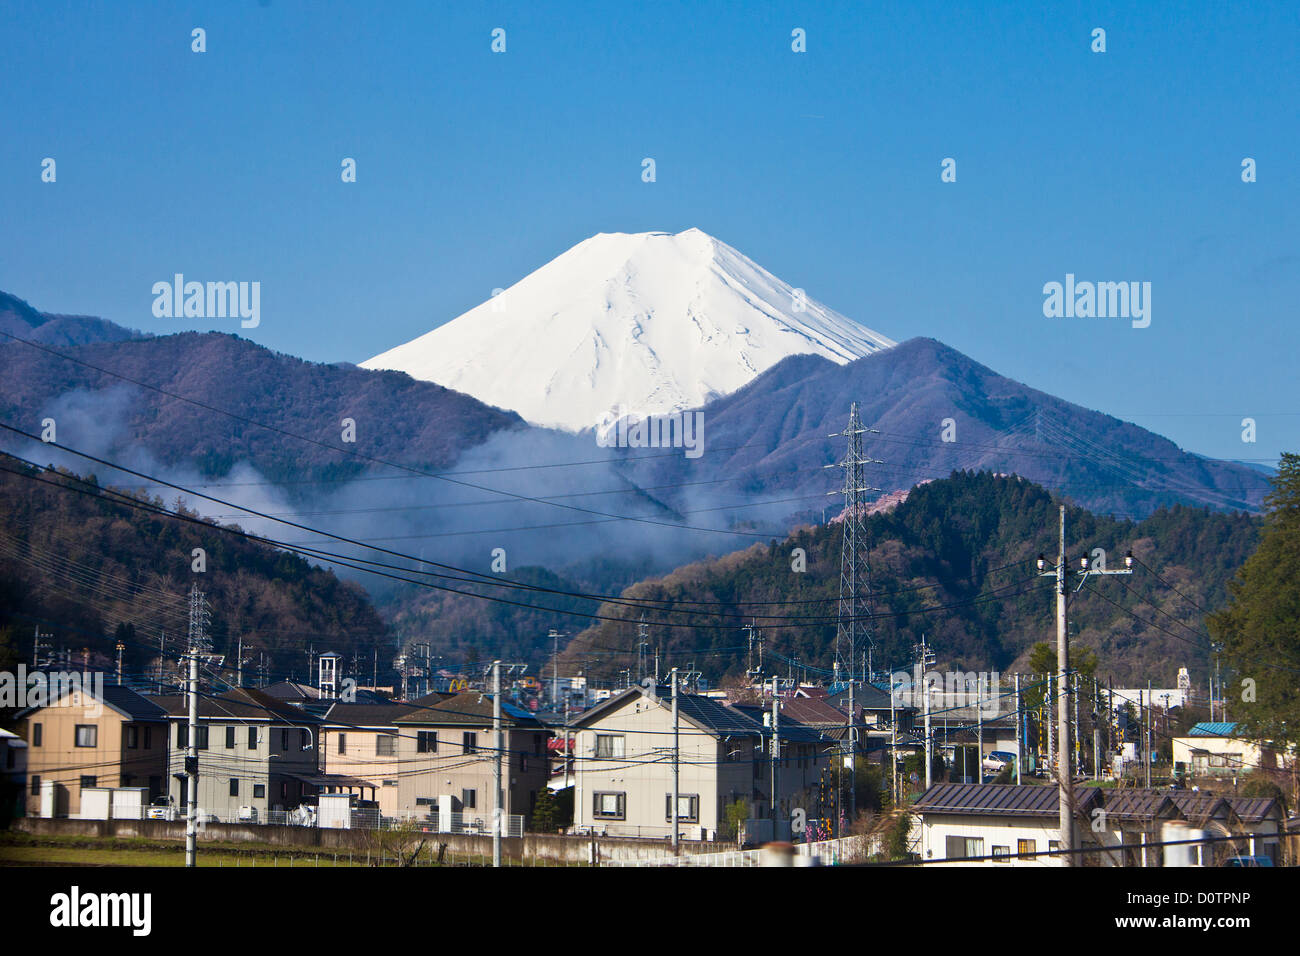 Japan, Asien, Urlaub, Reisen, Mount Fuji, Fuji, Fujiyama, Tsuru, Landschaft, Berg, Schnee, Frühling, Vulkan Stockfoto